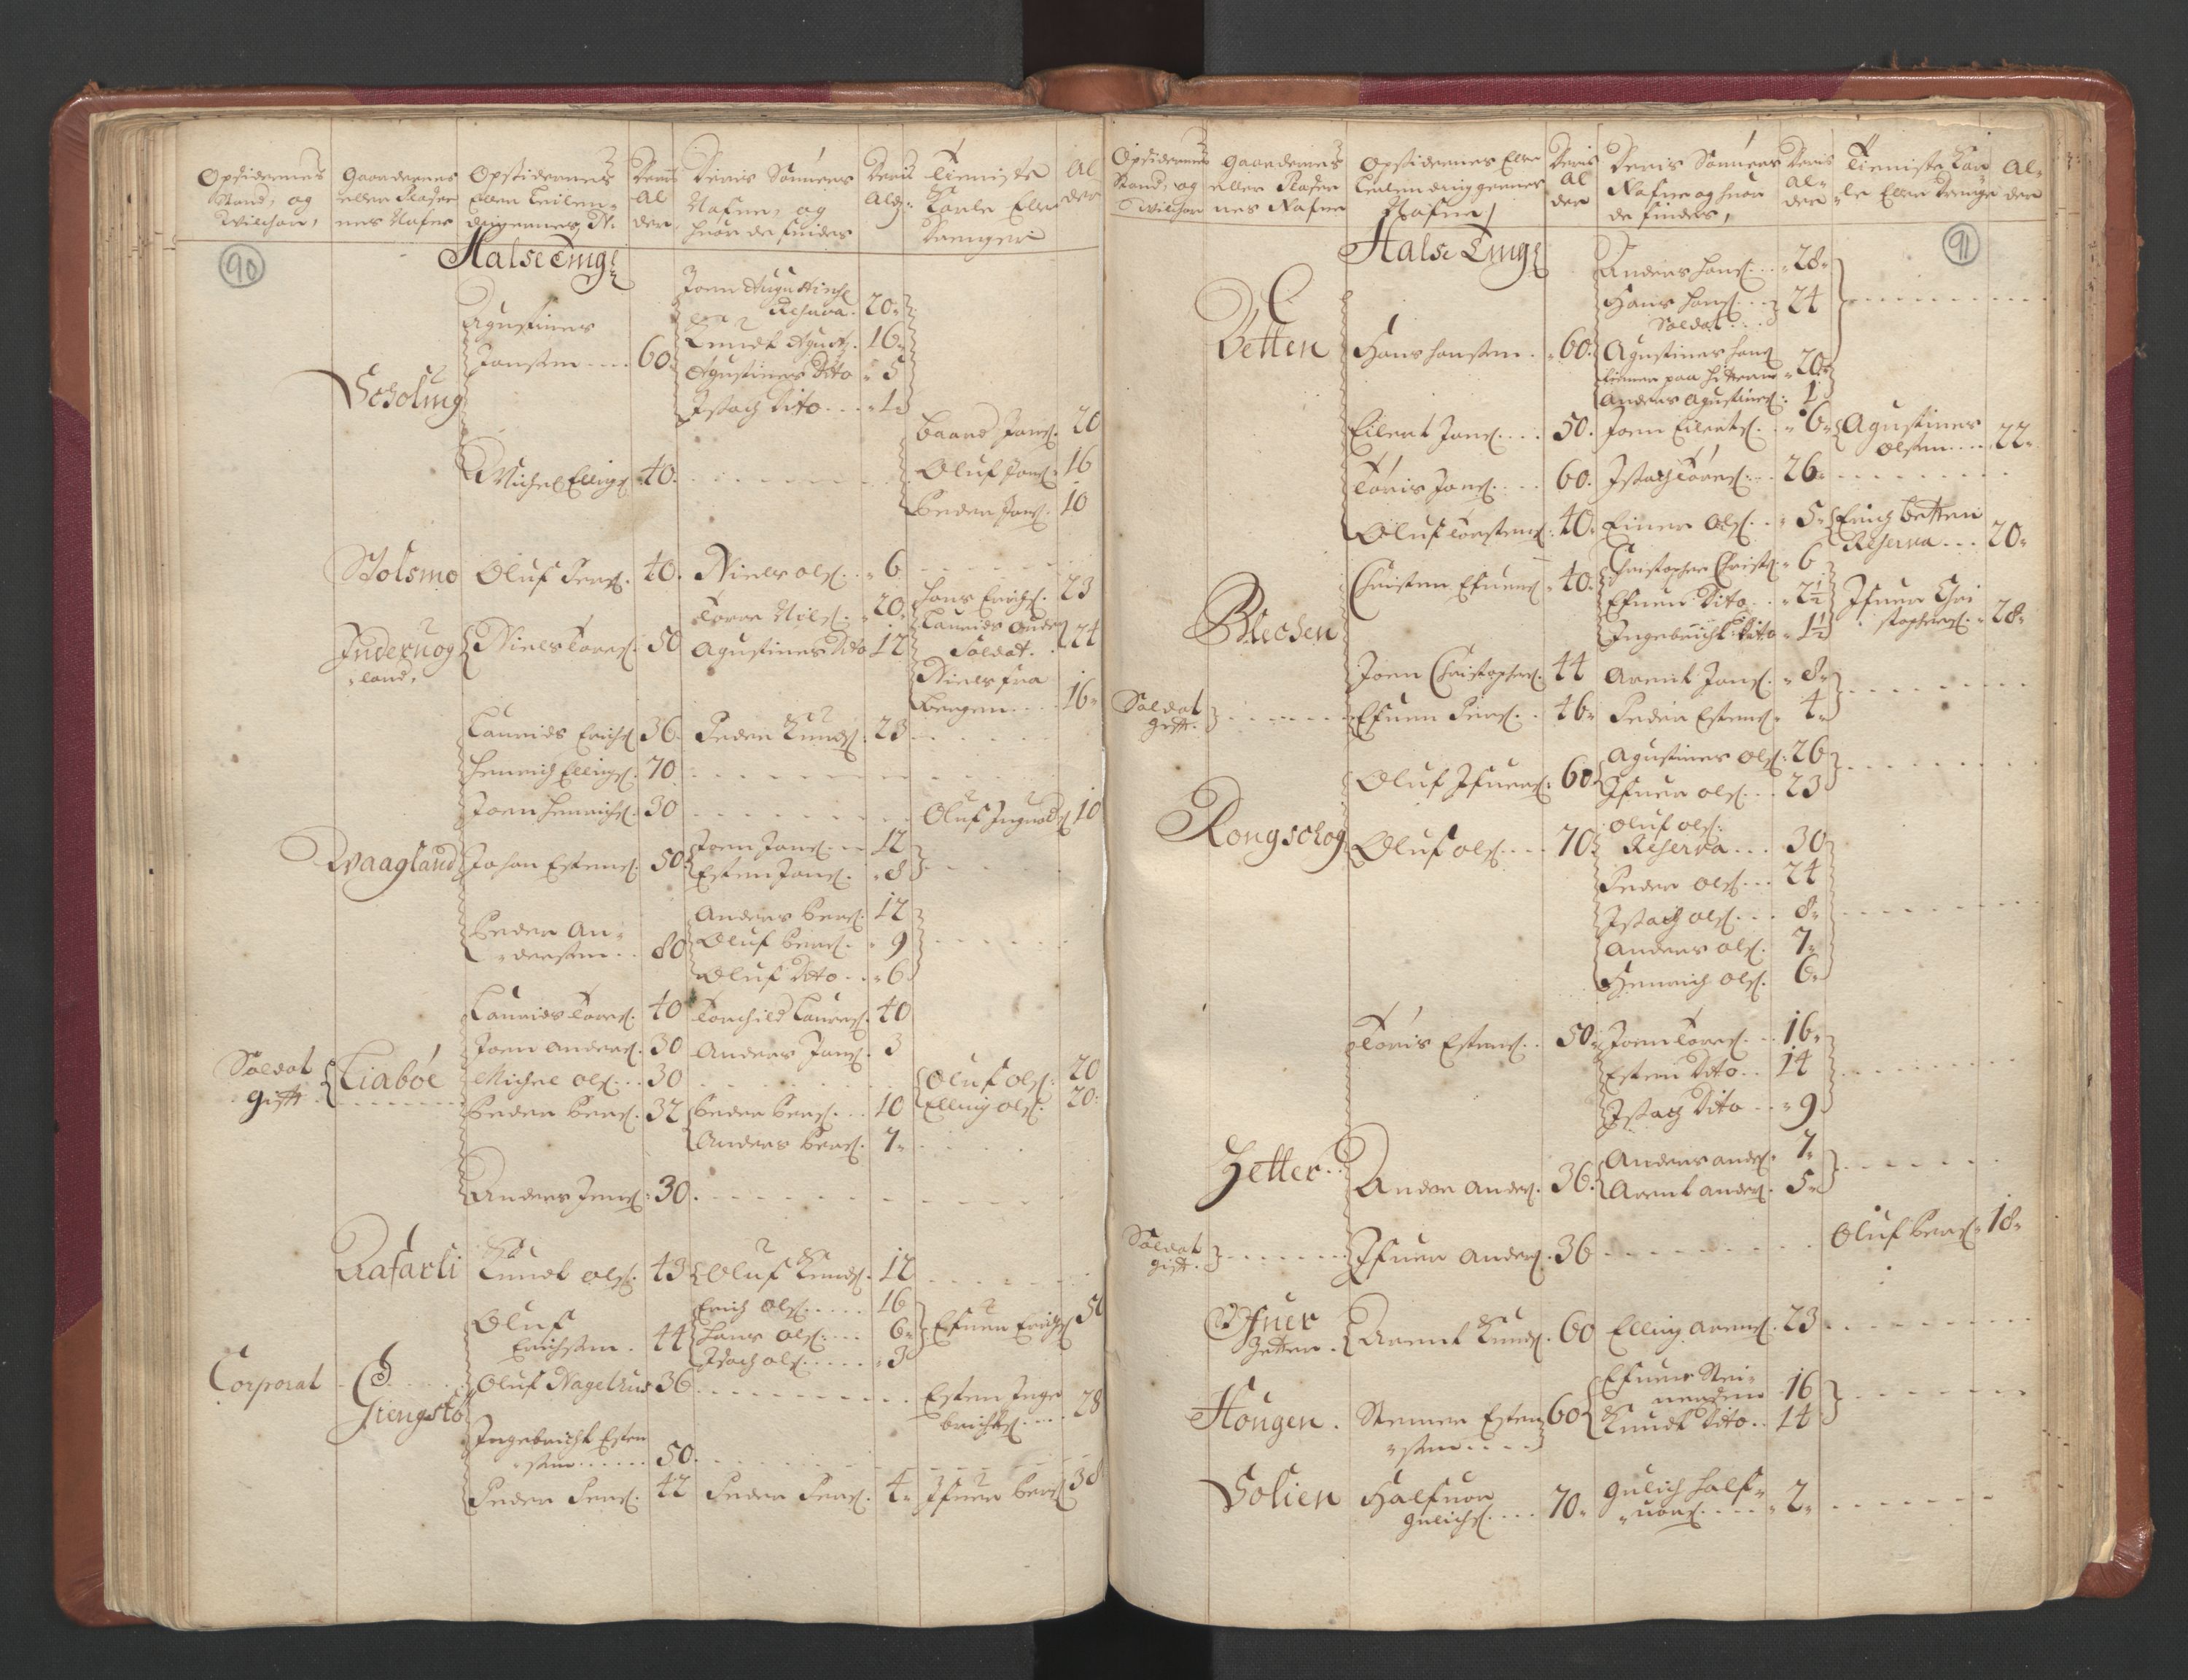 RA, Census (manntall) 1701, no. 11: Nordmøre fogderi and Romsdal fogderi, 1701, p. 90-91